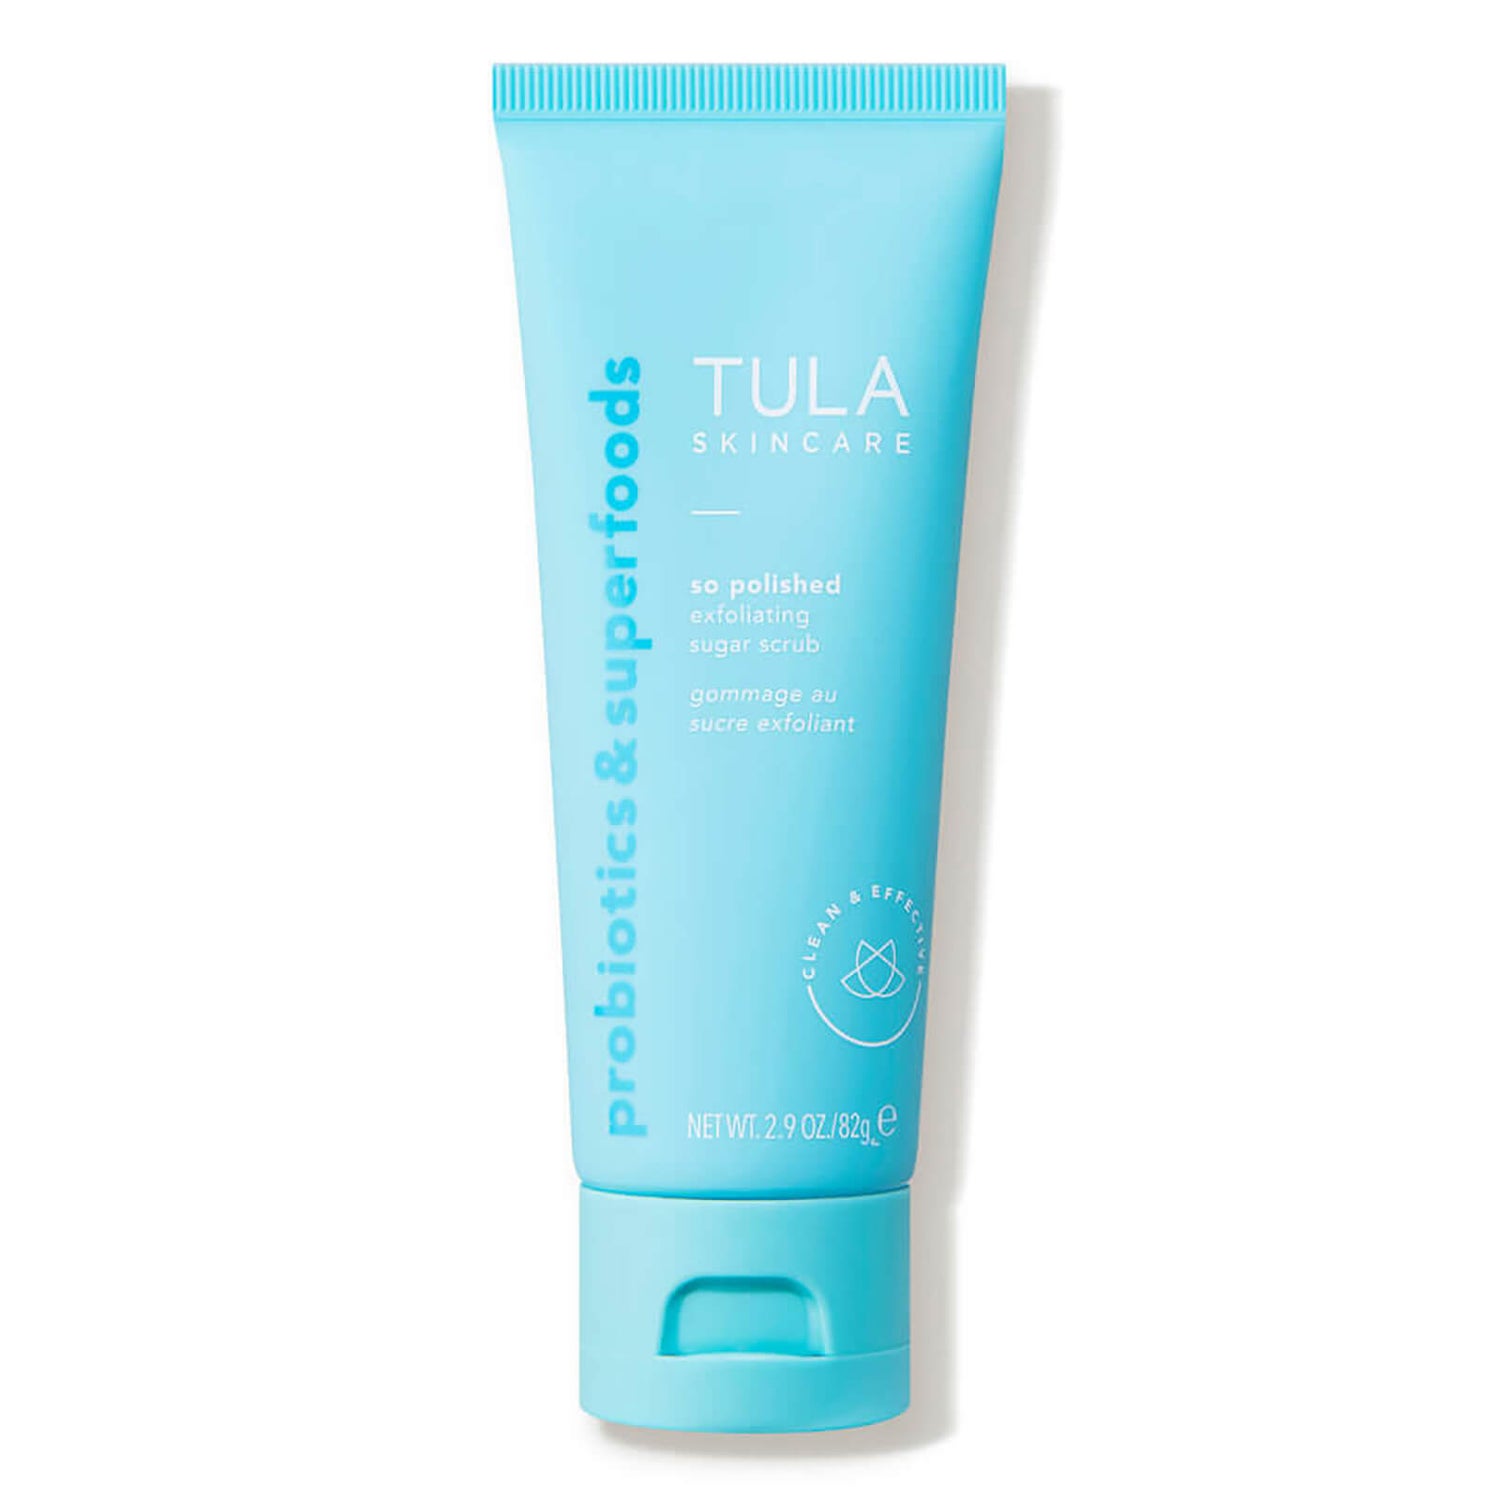 TULA Skincare So Polished Exfoliating Sugar Scrub (2.9 oz.)